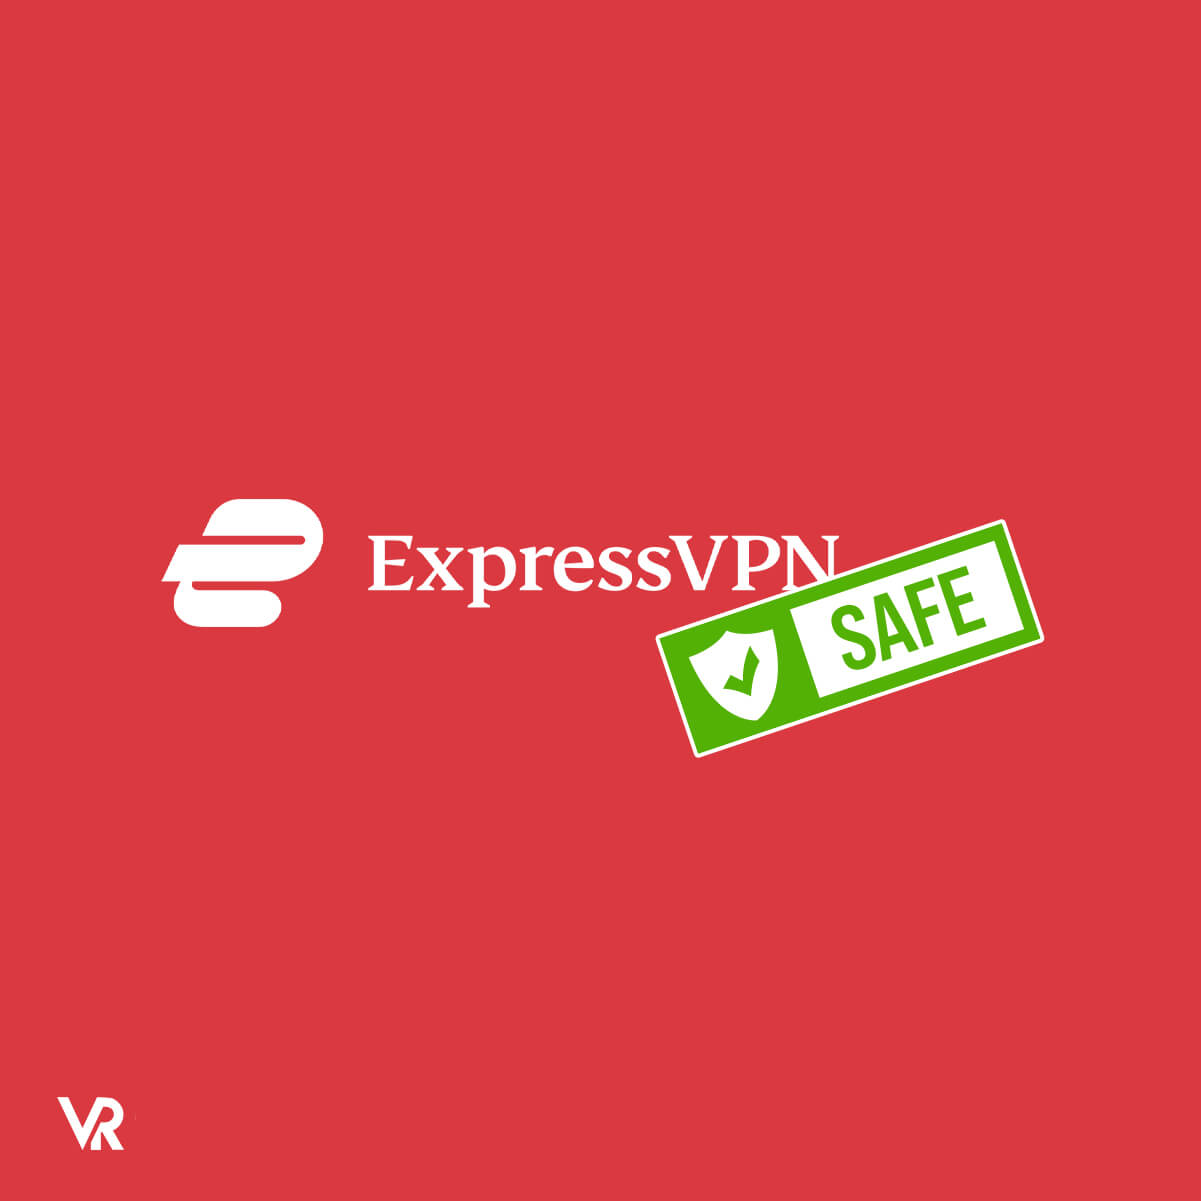 is ExpressVPN safe Featured